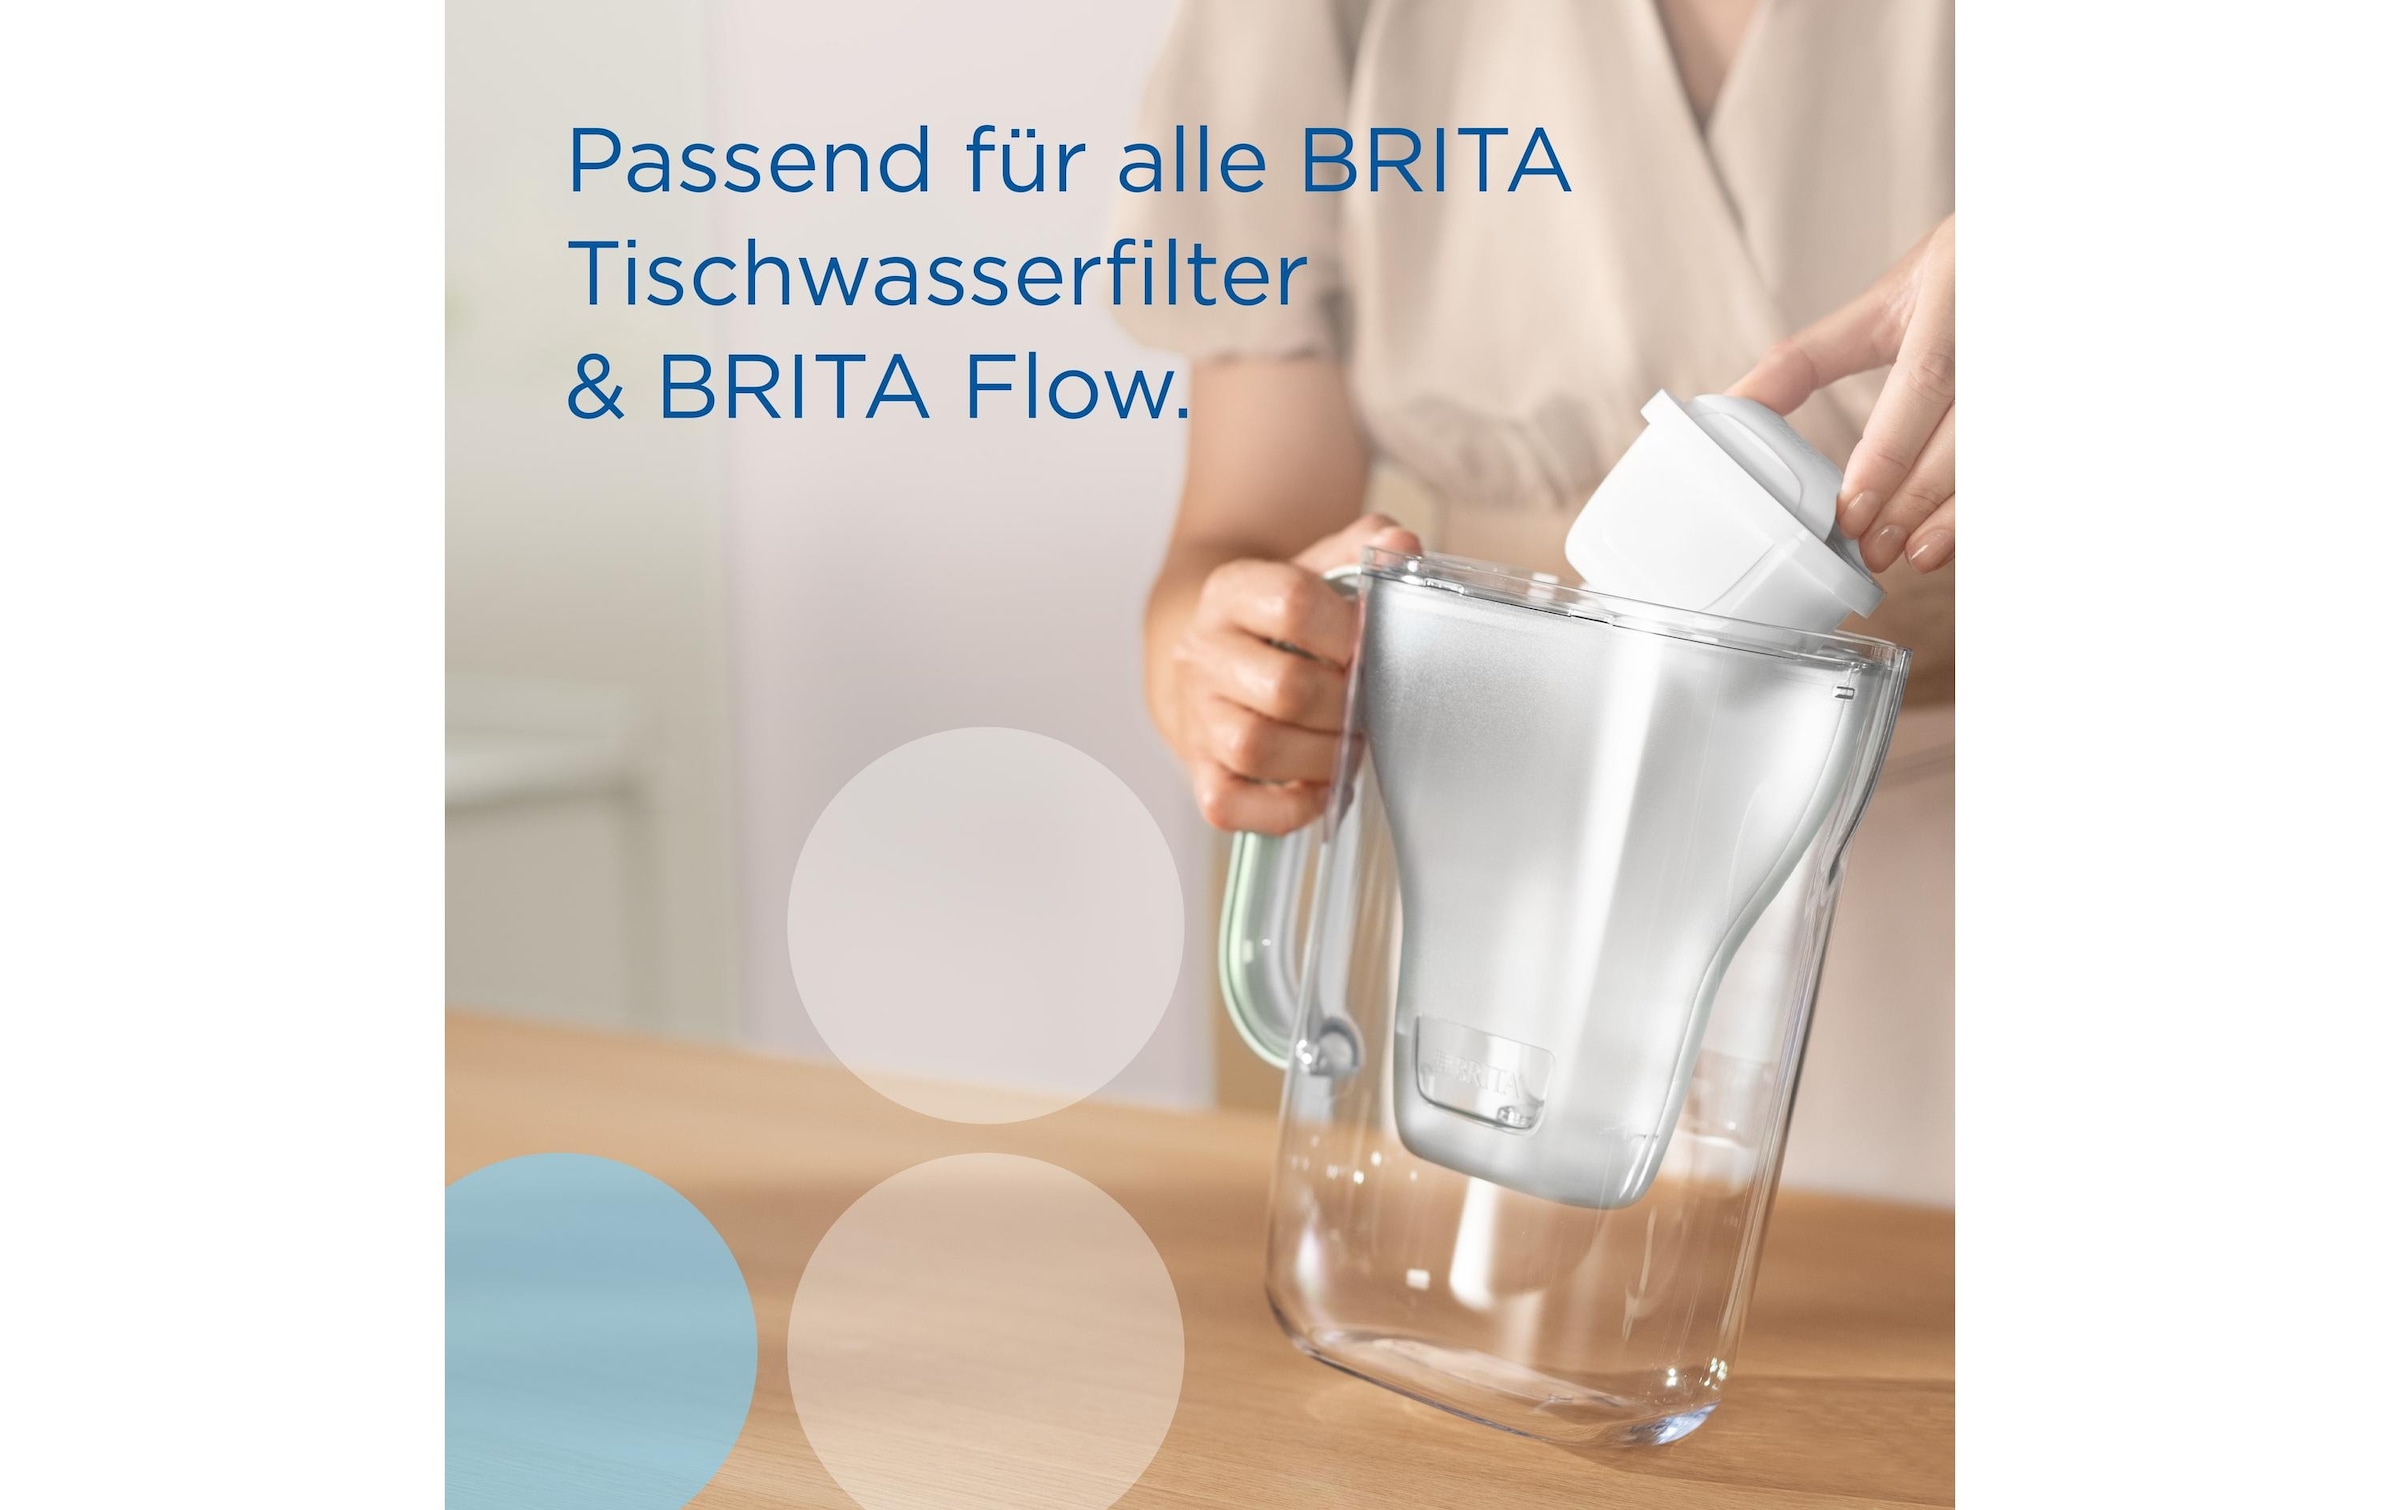 BRITA Wasserfilter »Maxtra Pro Extra Kalkschutz, 6er Pack«, (6 tlg.)